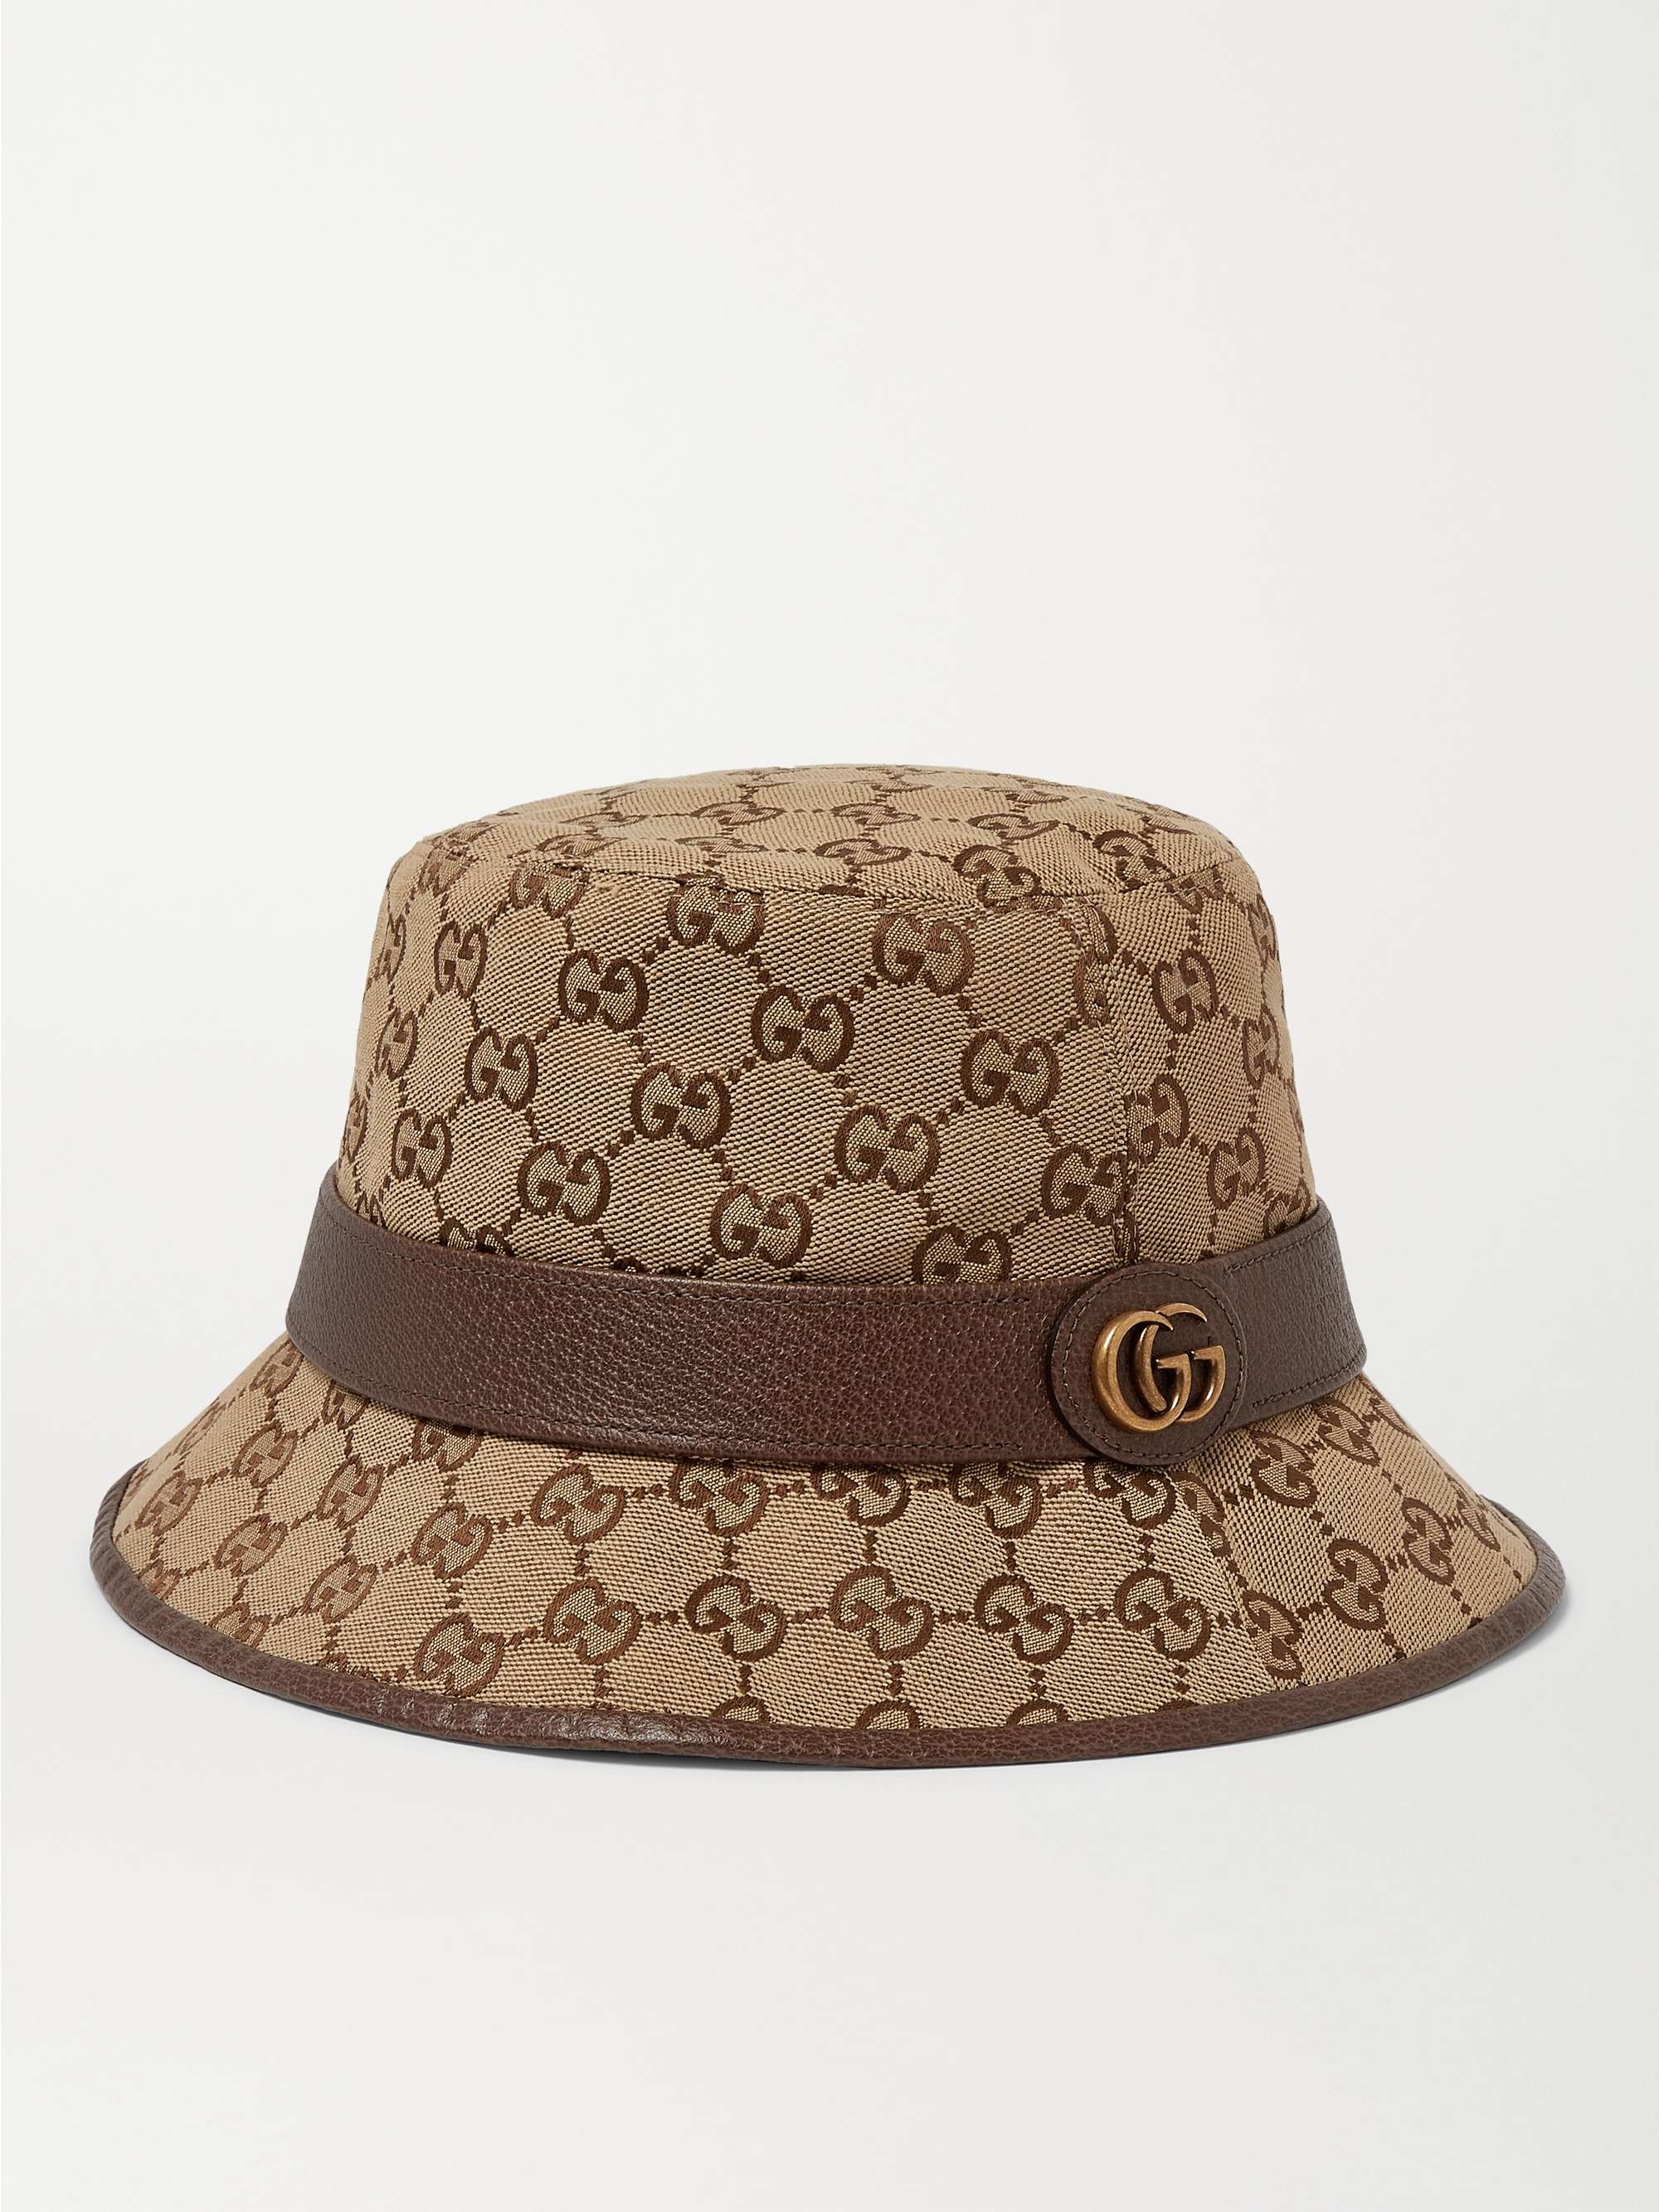 Brown Leather-Trimmed Monogrammed Canvas Bucket Hat | GUCCI | MR PORTER